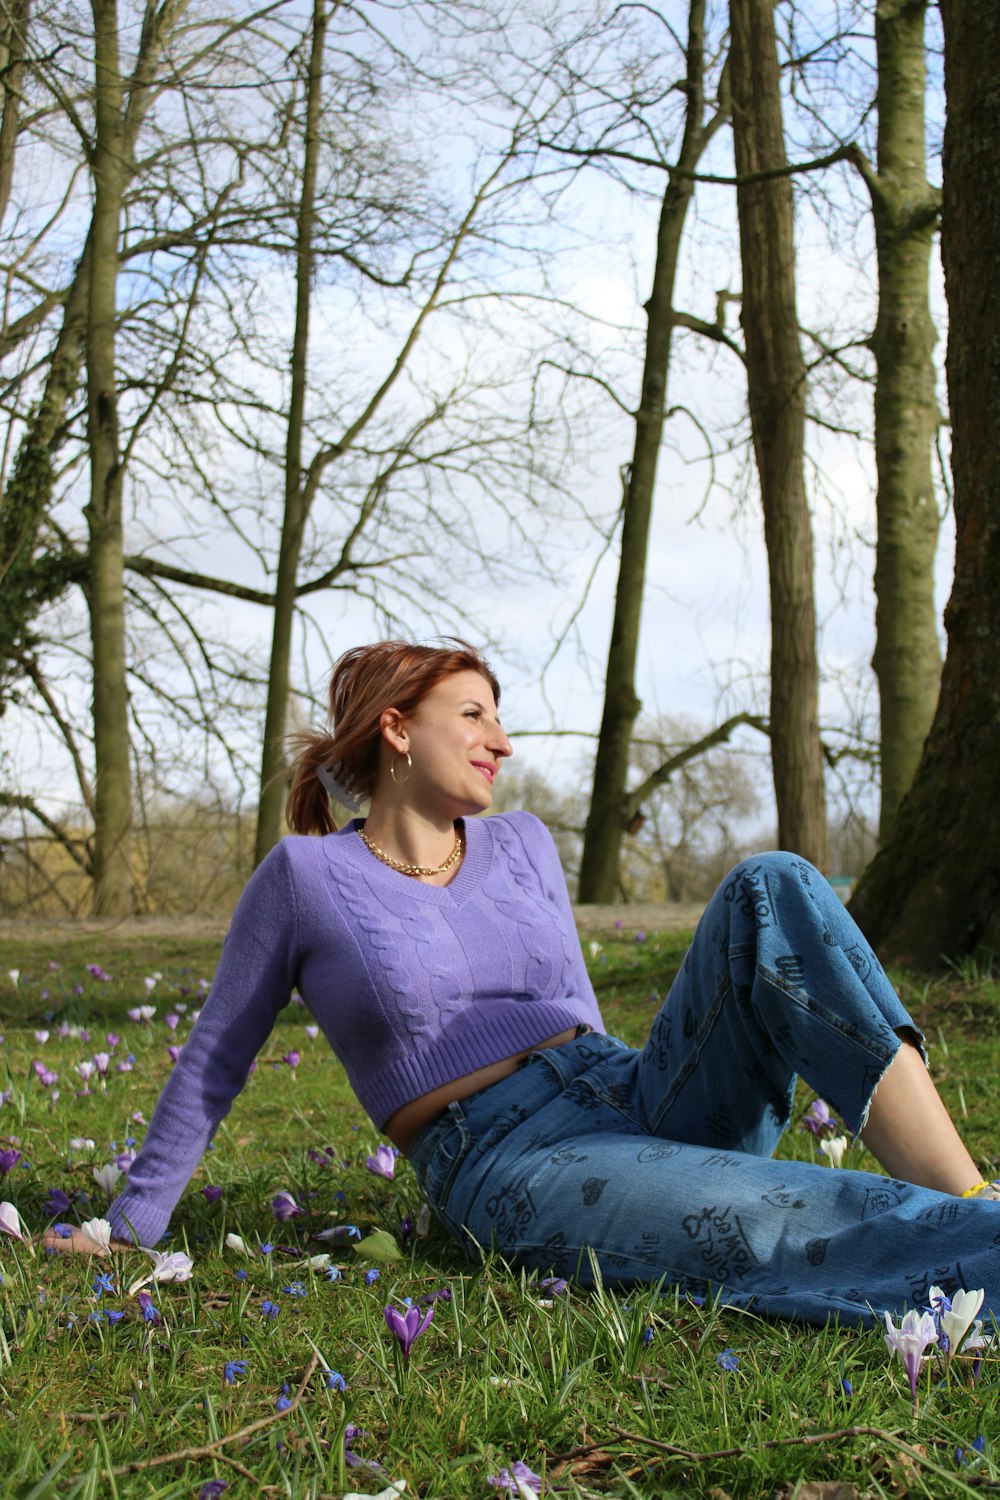 a person sitting in a grassy area